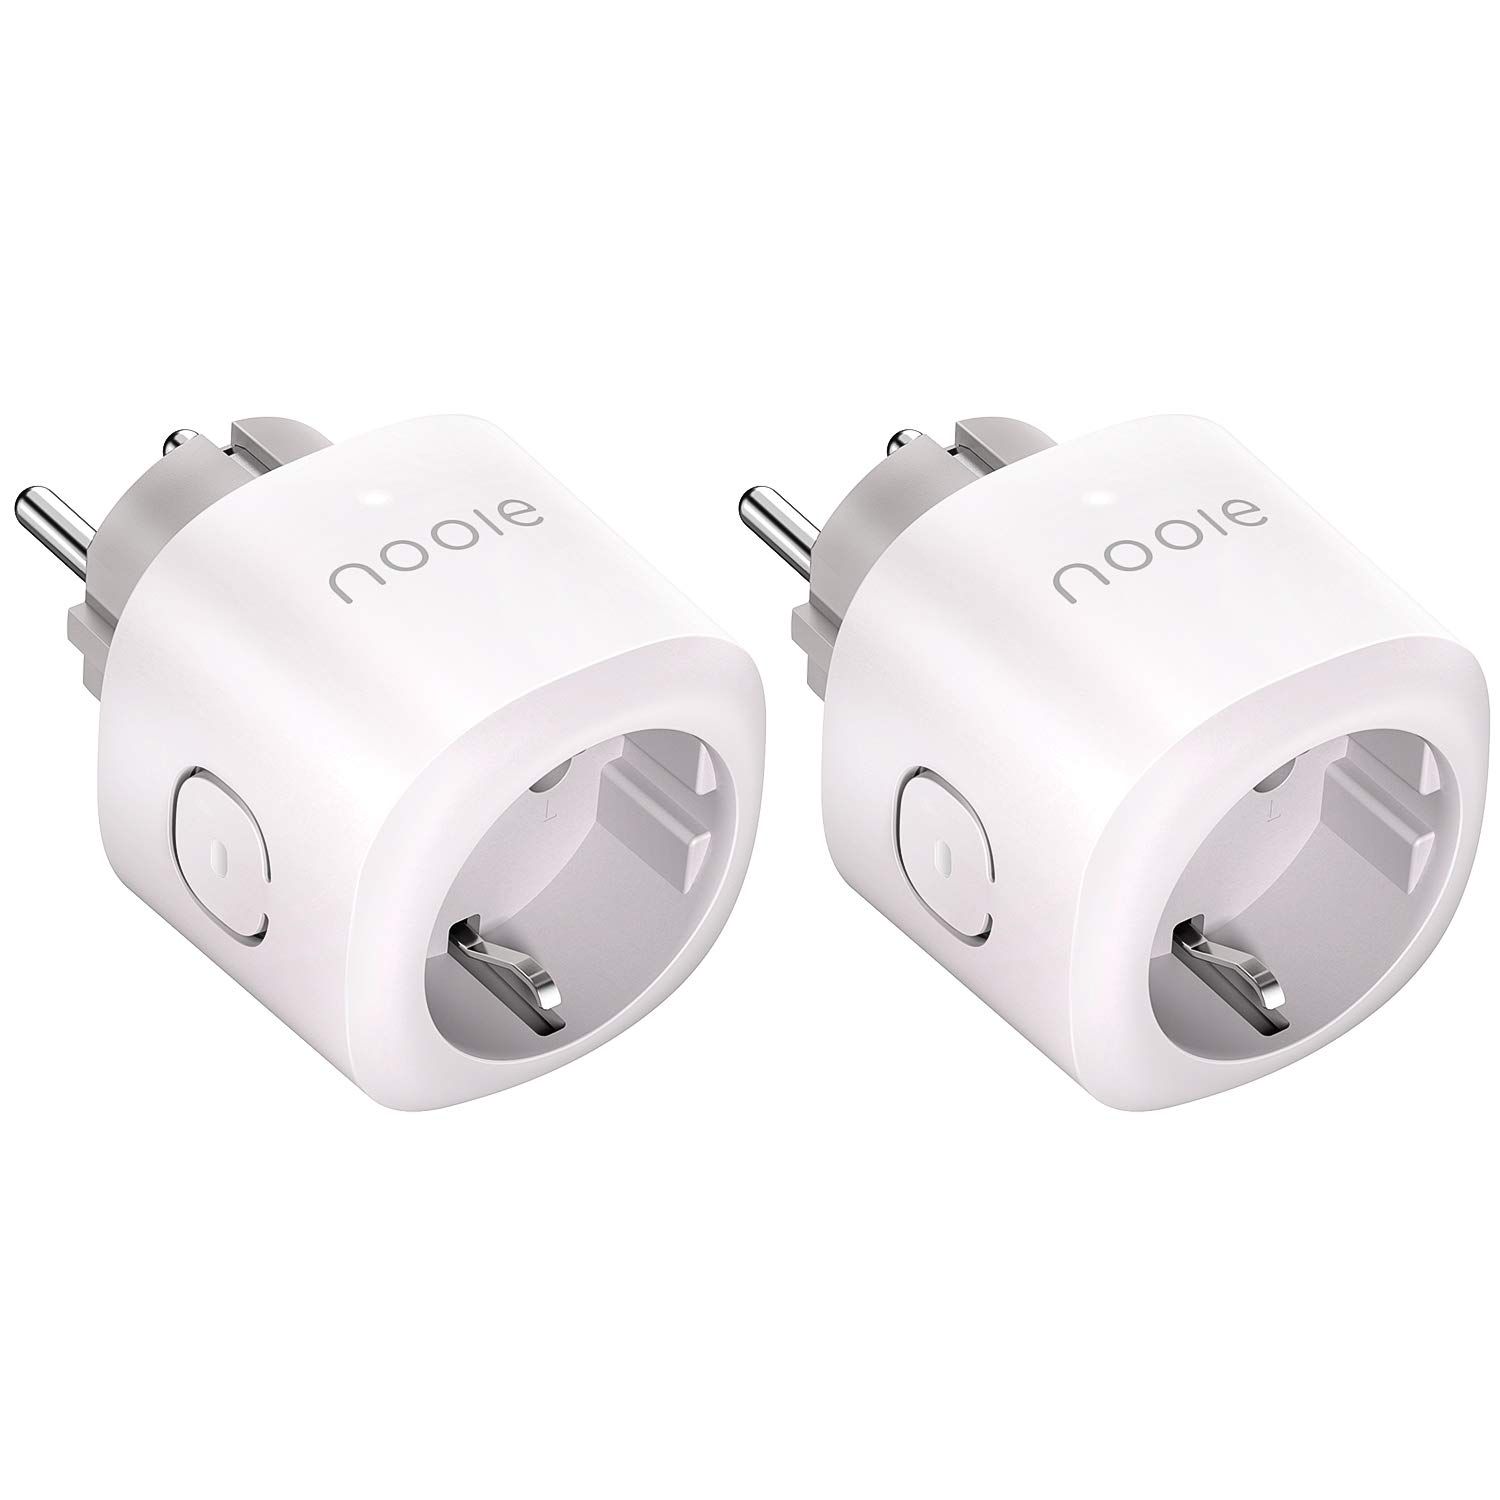 Nooie Enchufe Inteligente Smart Plug con Temporizador Interruptor Wifi, Compatible con Google Home Amazon Alexa (pack-2)